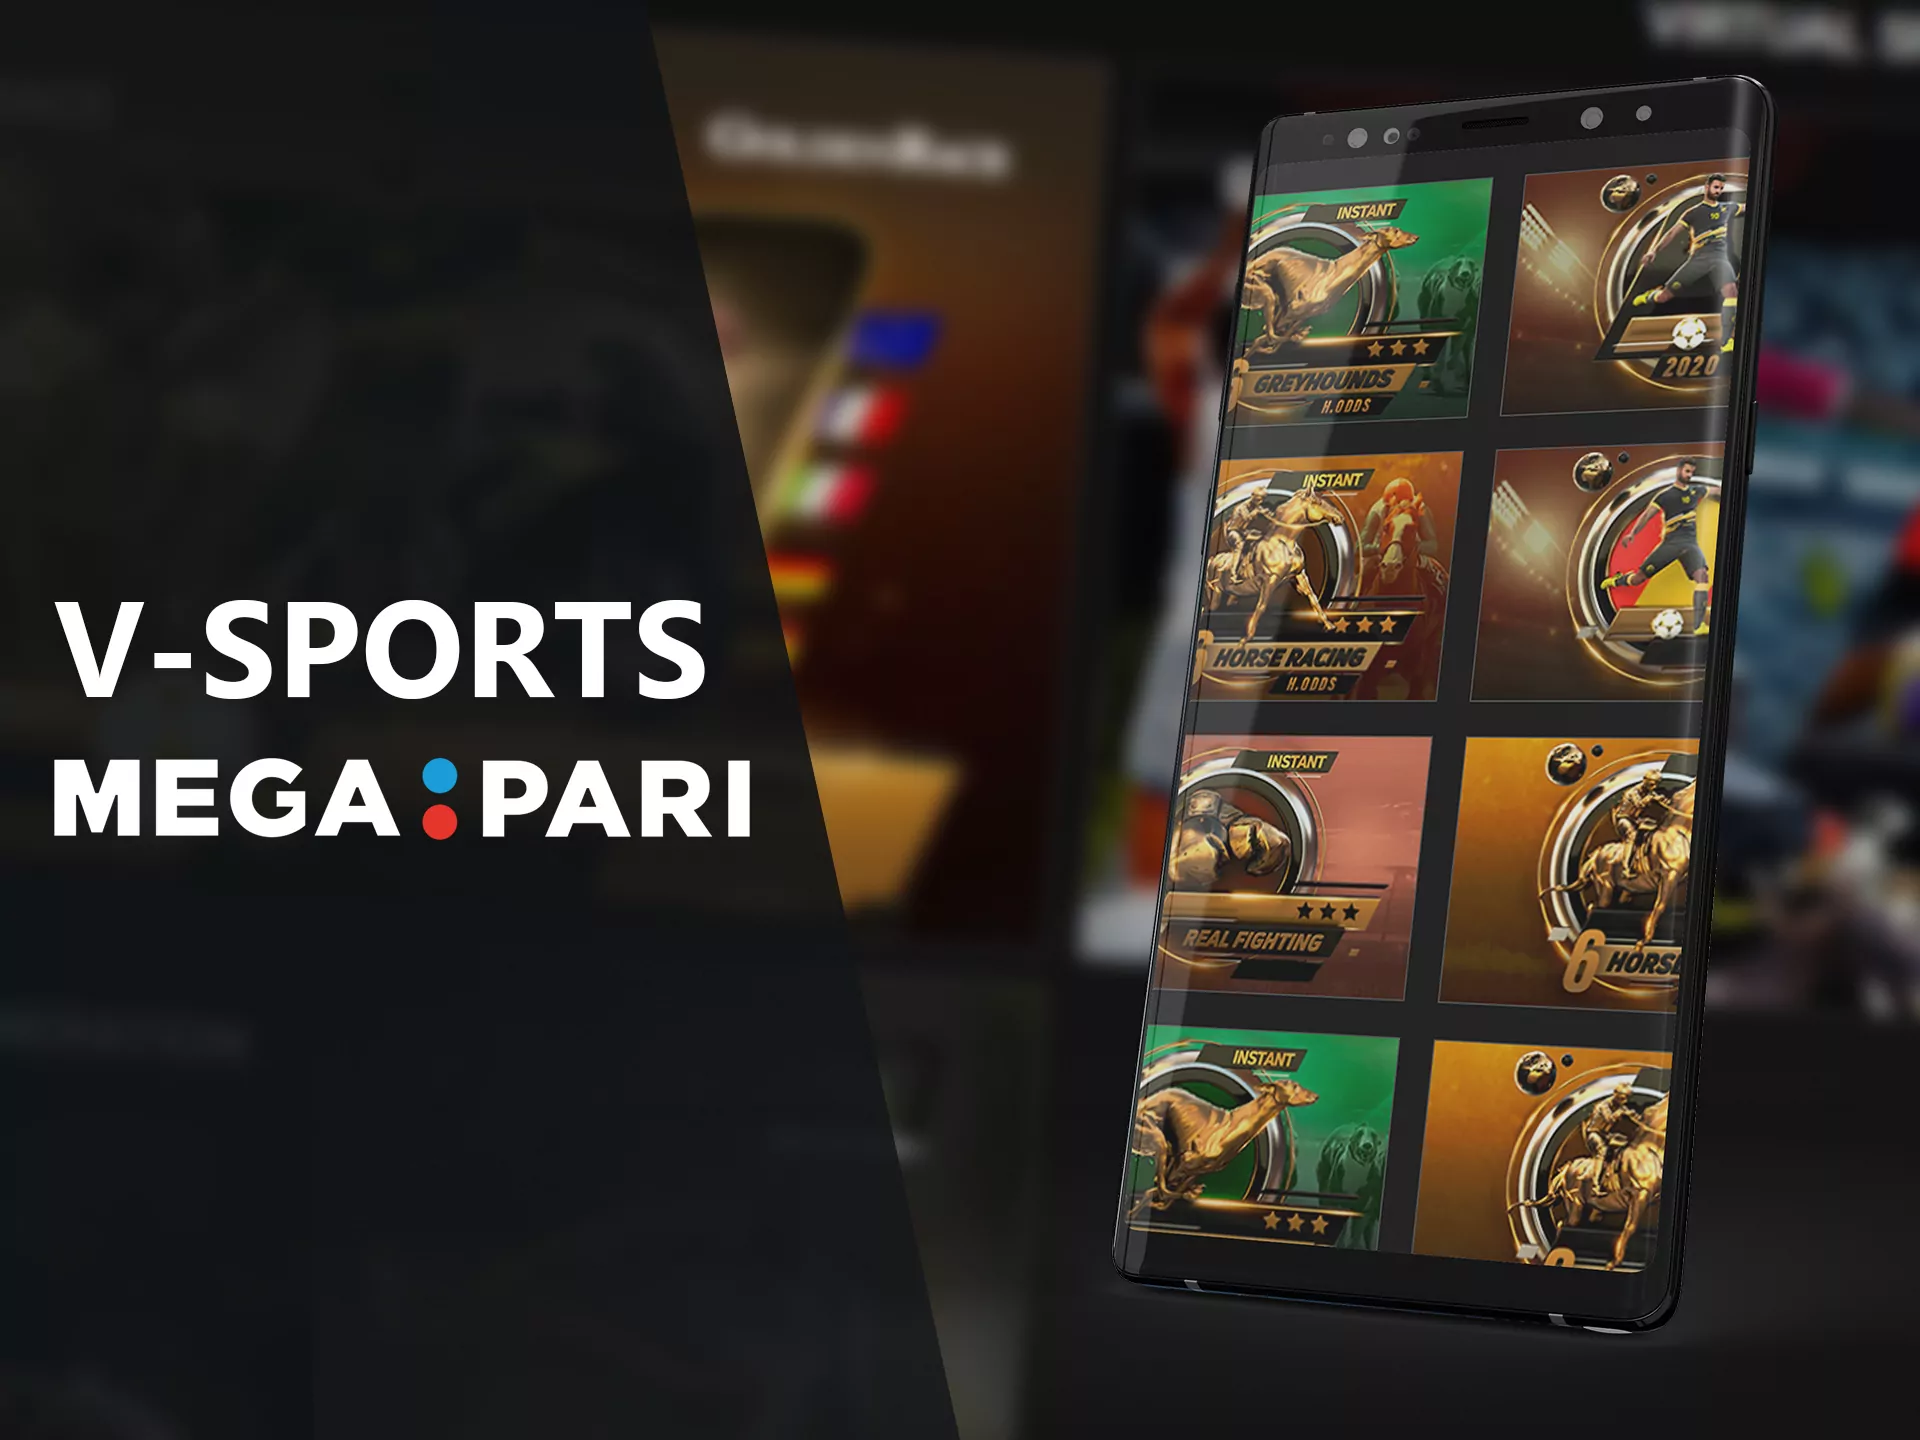 Bet on virtual sports in the Megapari app.